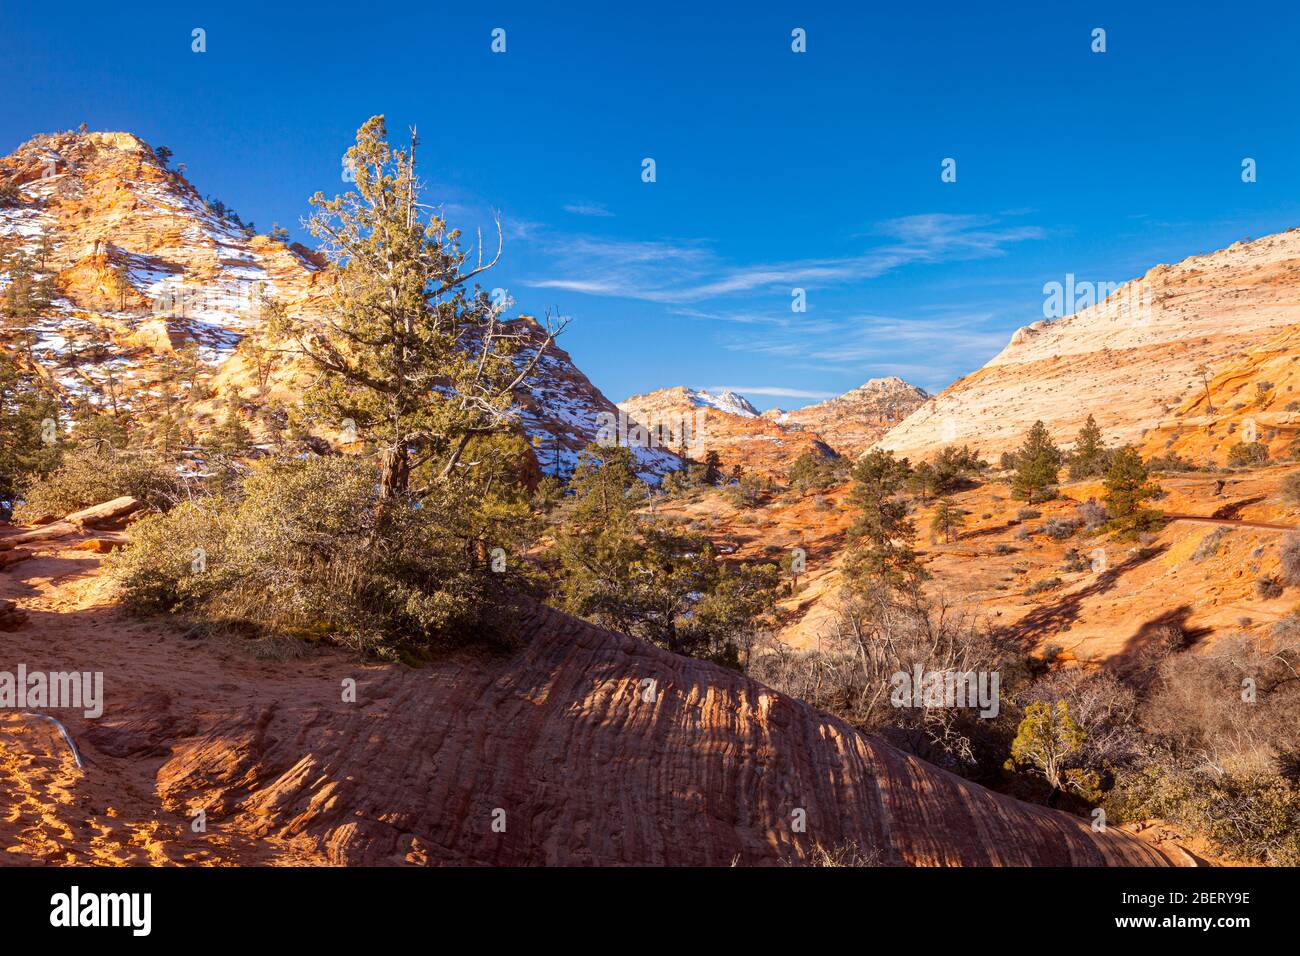 Early morning scene in Zion National Park, Utah USA Stock Photo